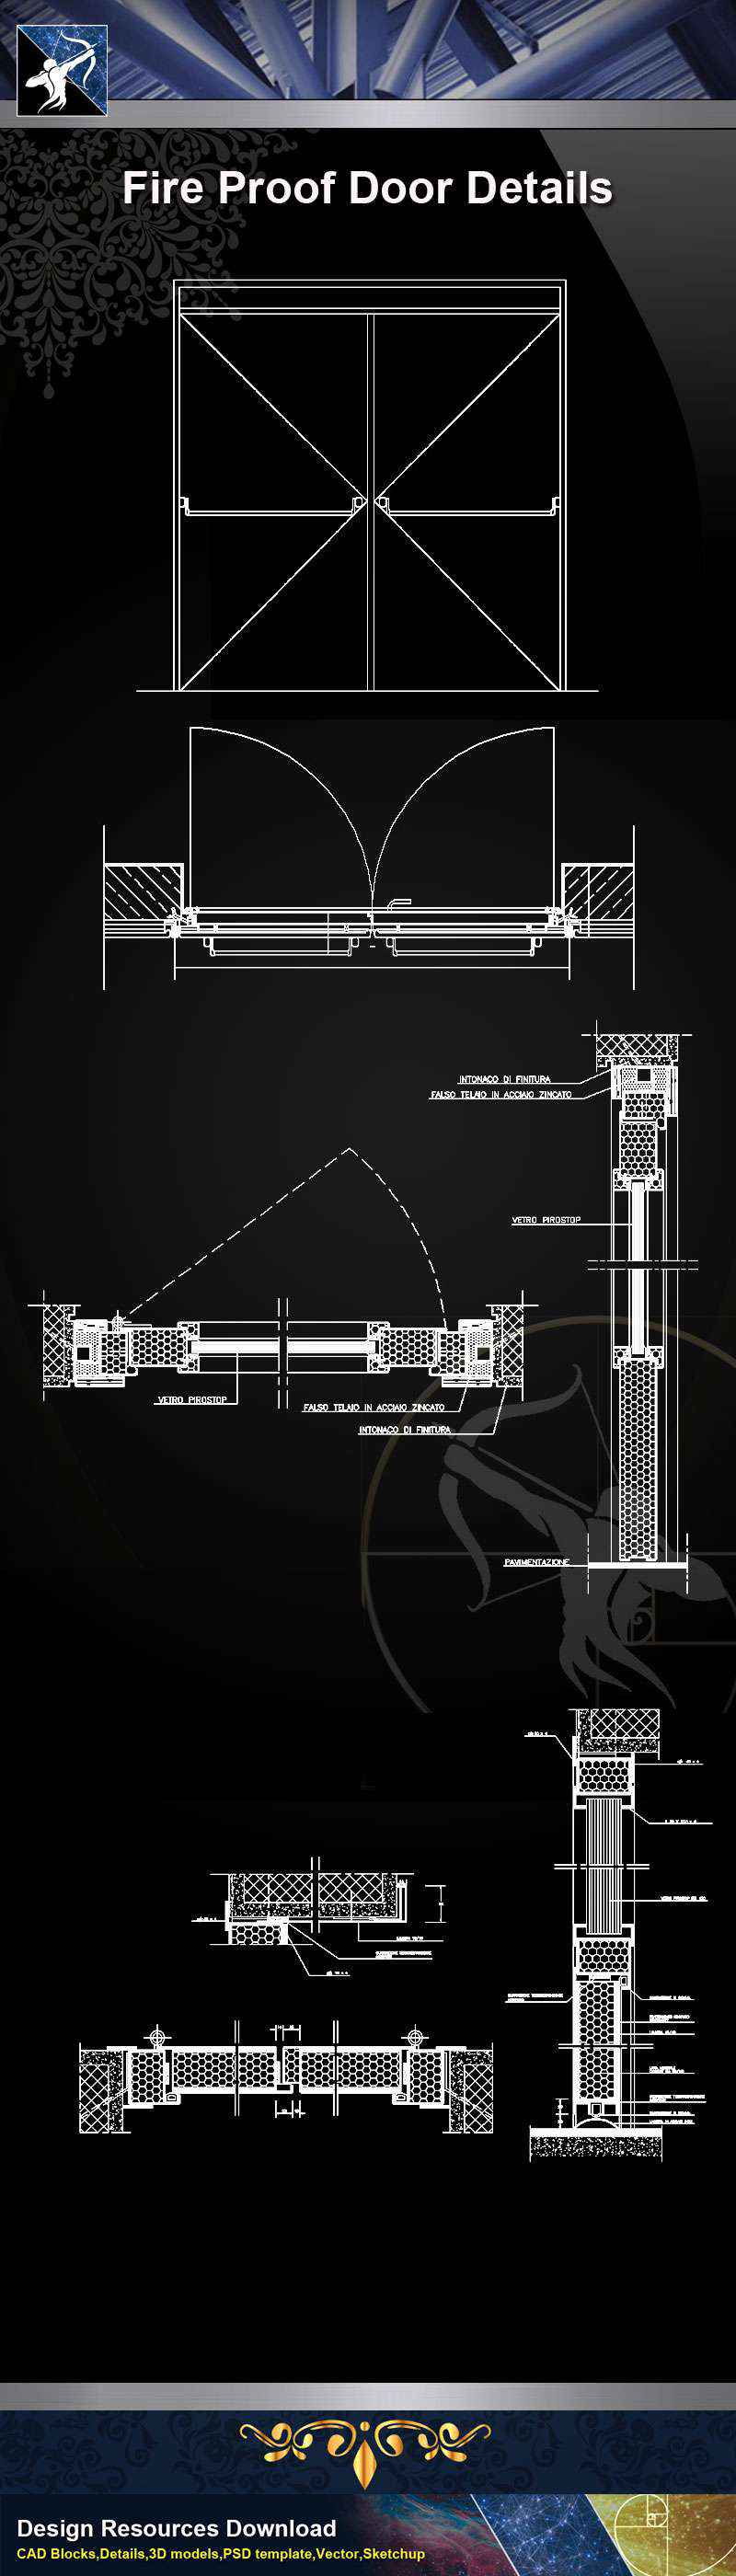 【Architecture CAD Details Collections】Fire Proof Door CAD Details